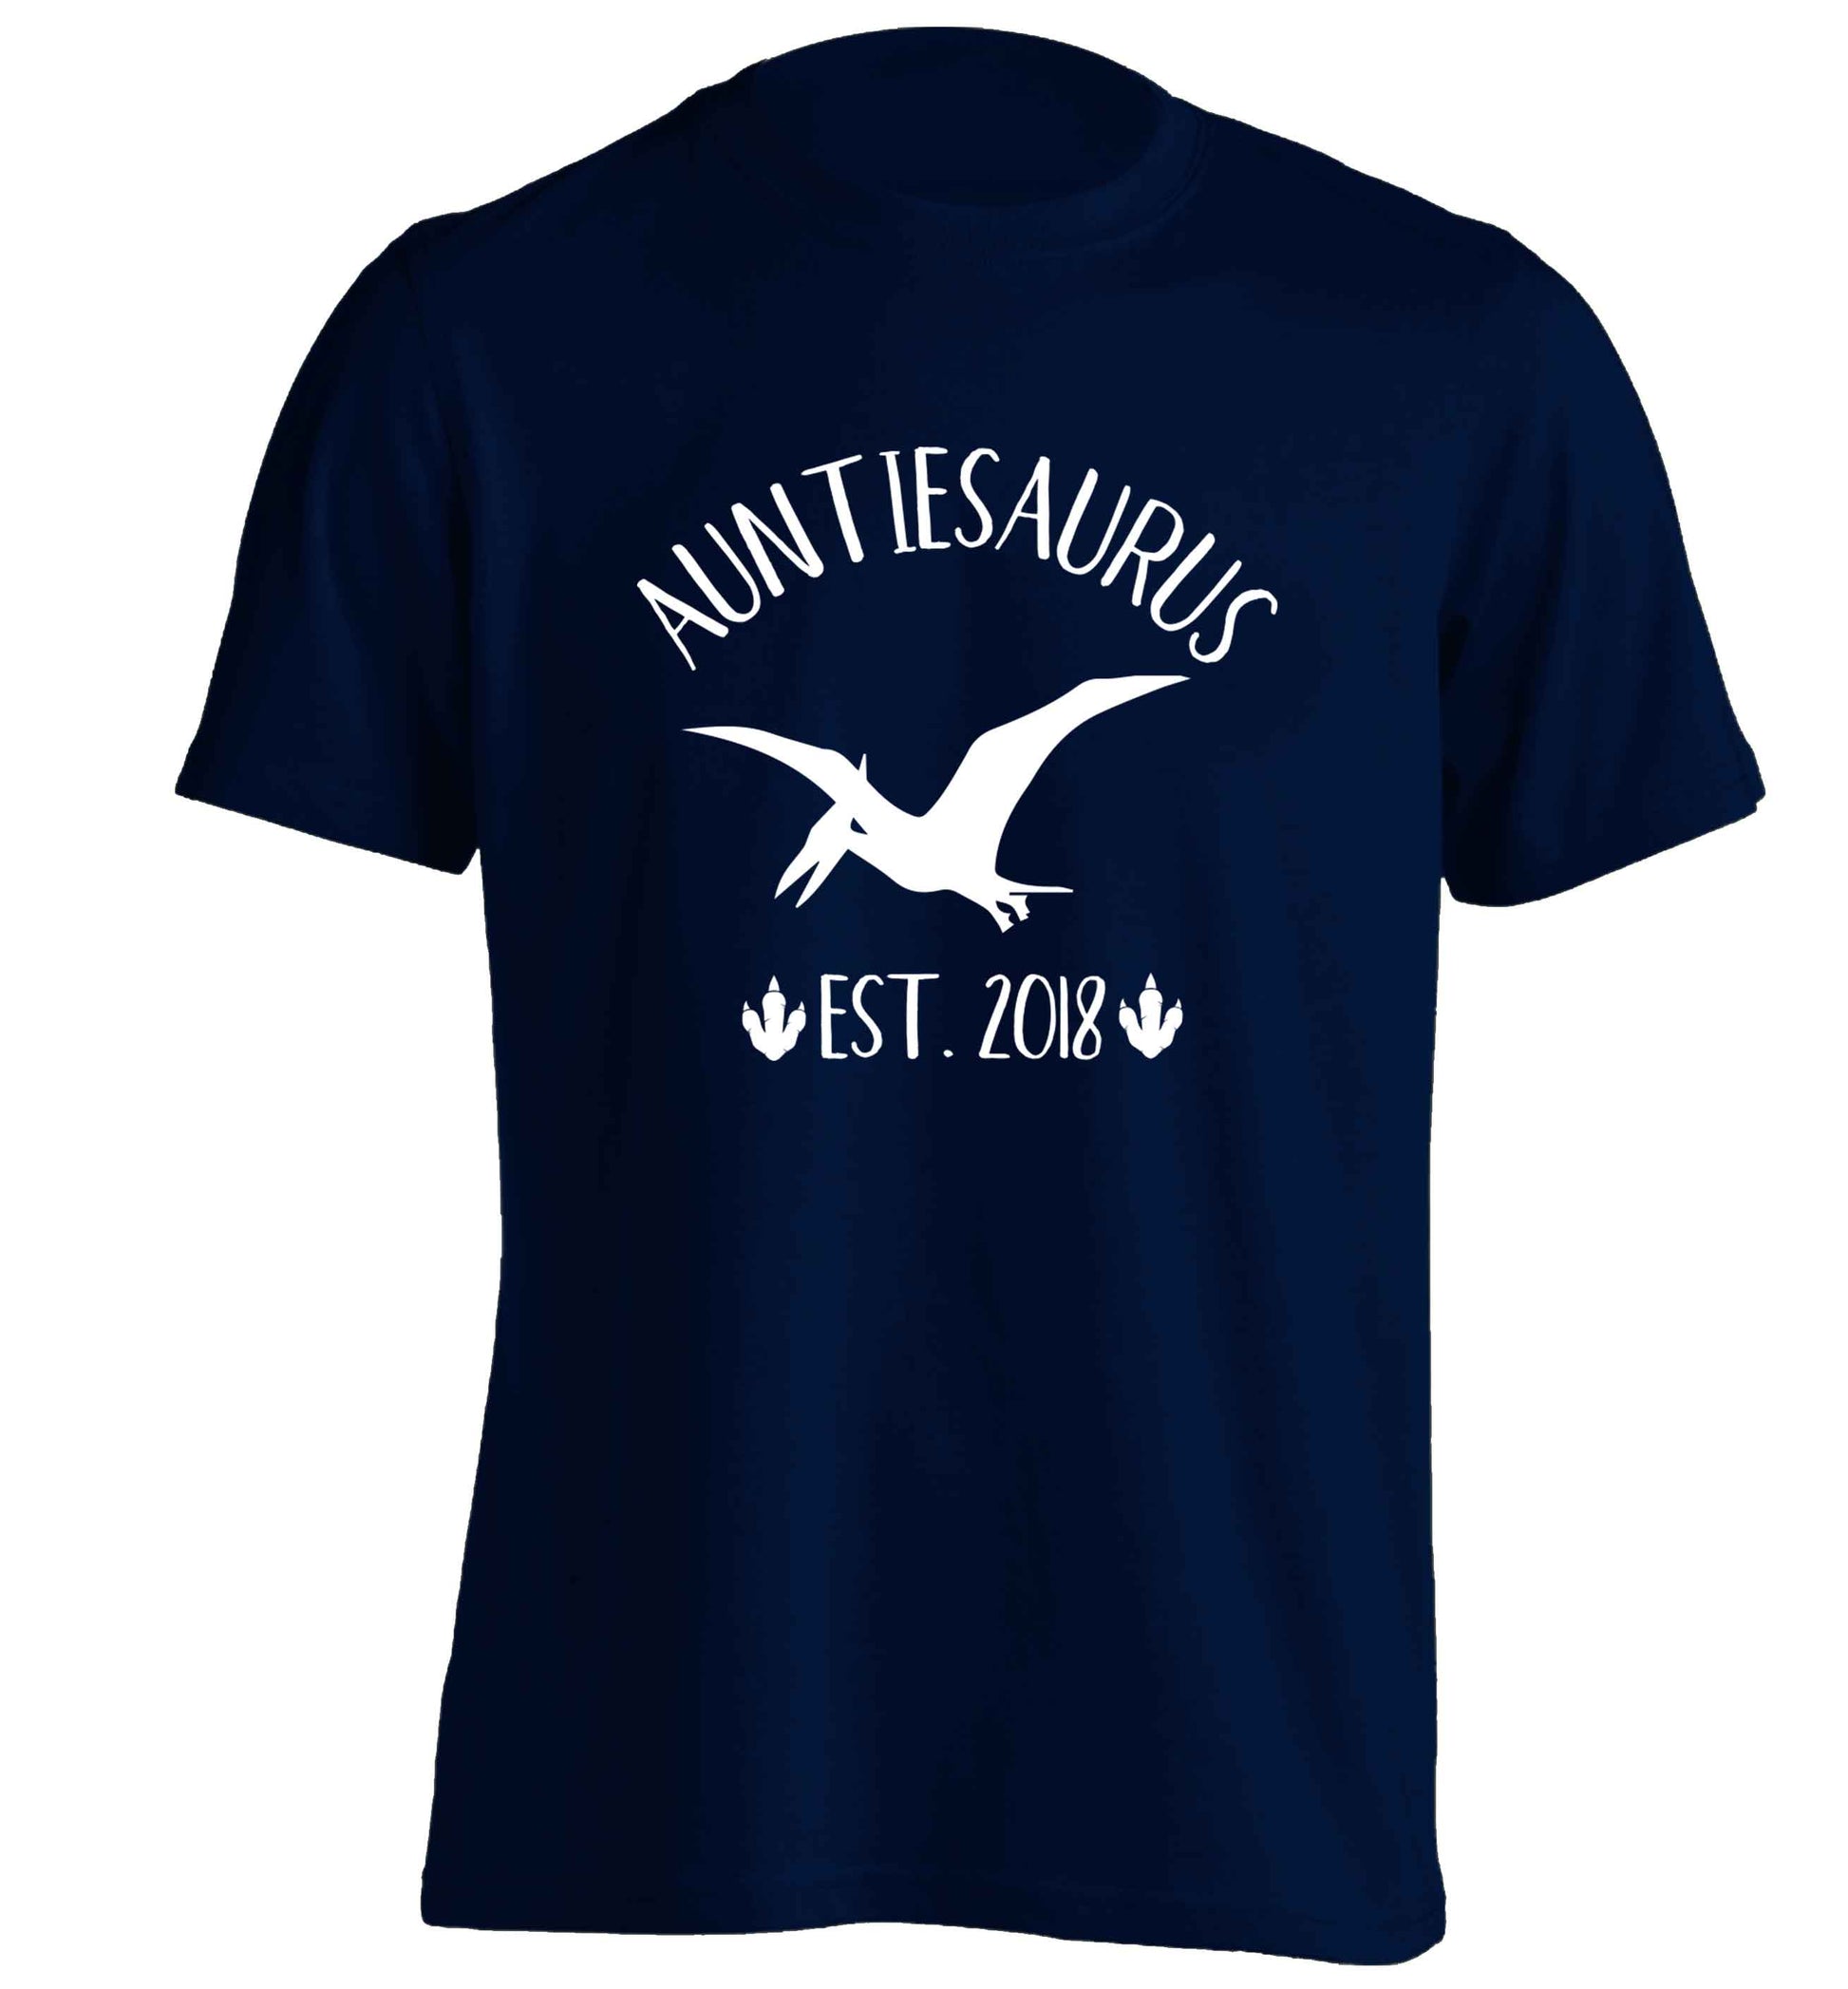 Personalised auntiesaurus since (custom date) adults unisex navy Tshirt 2XL